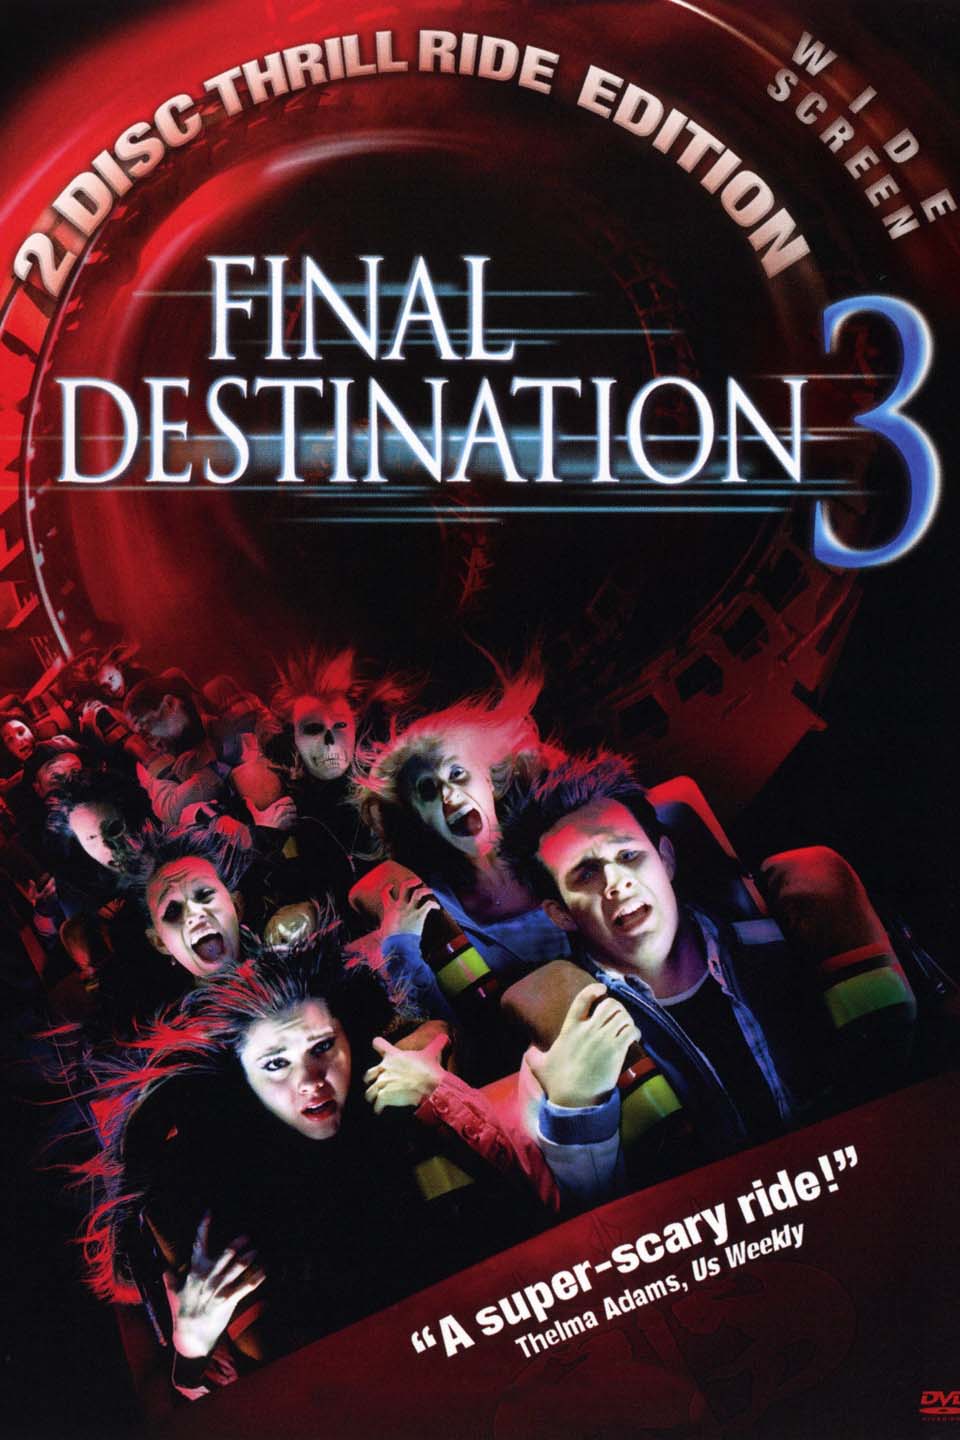 Final Destination 3 (2006) | Scratchpad | Fandom